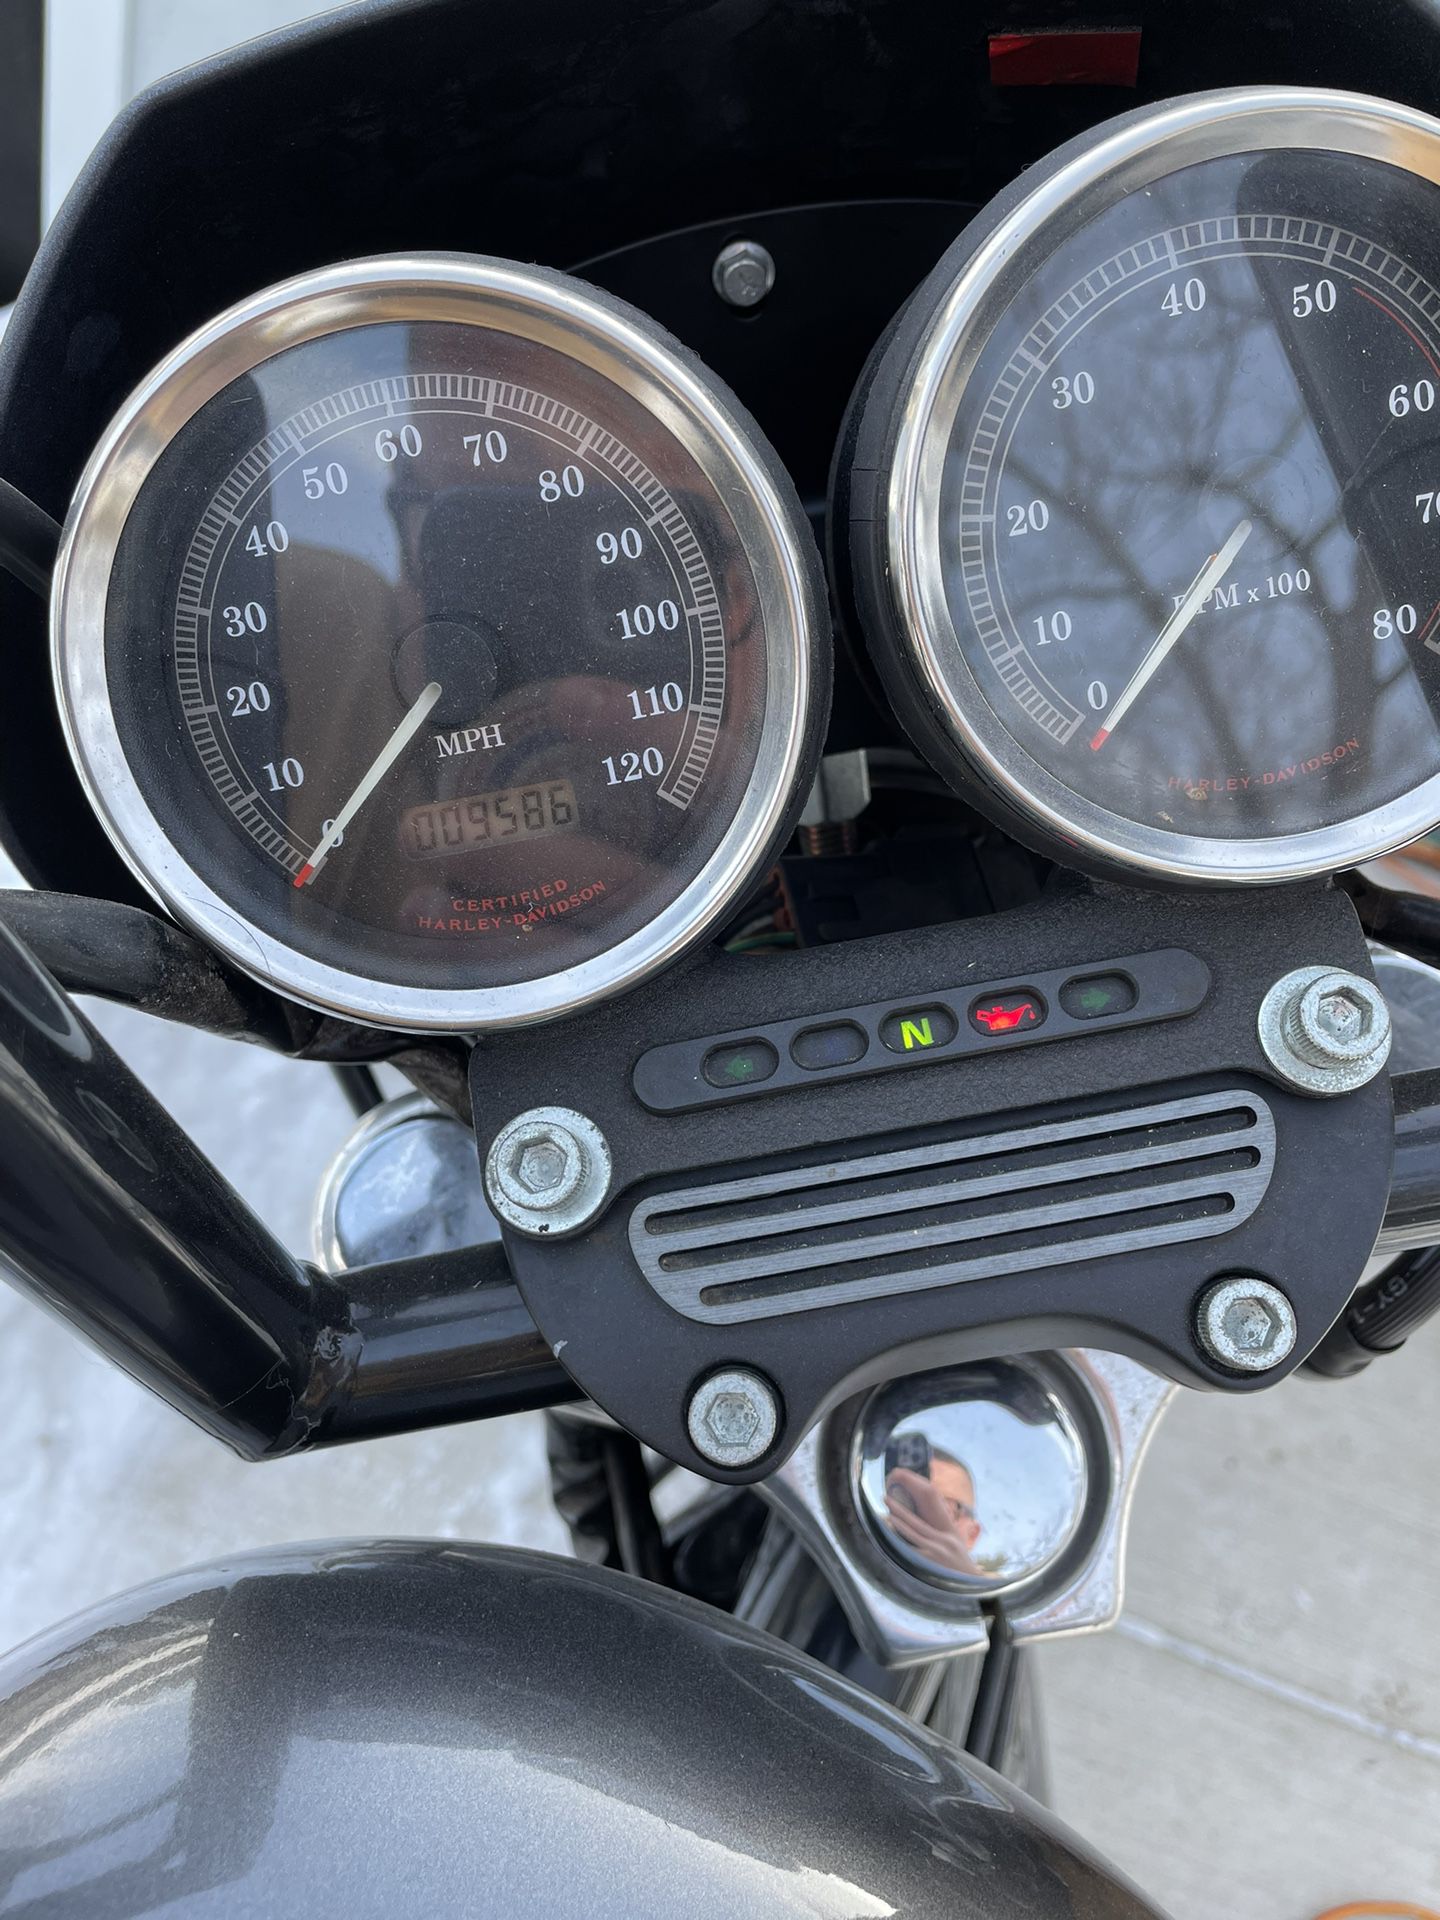 2001 Harley Davidson Sportster1200